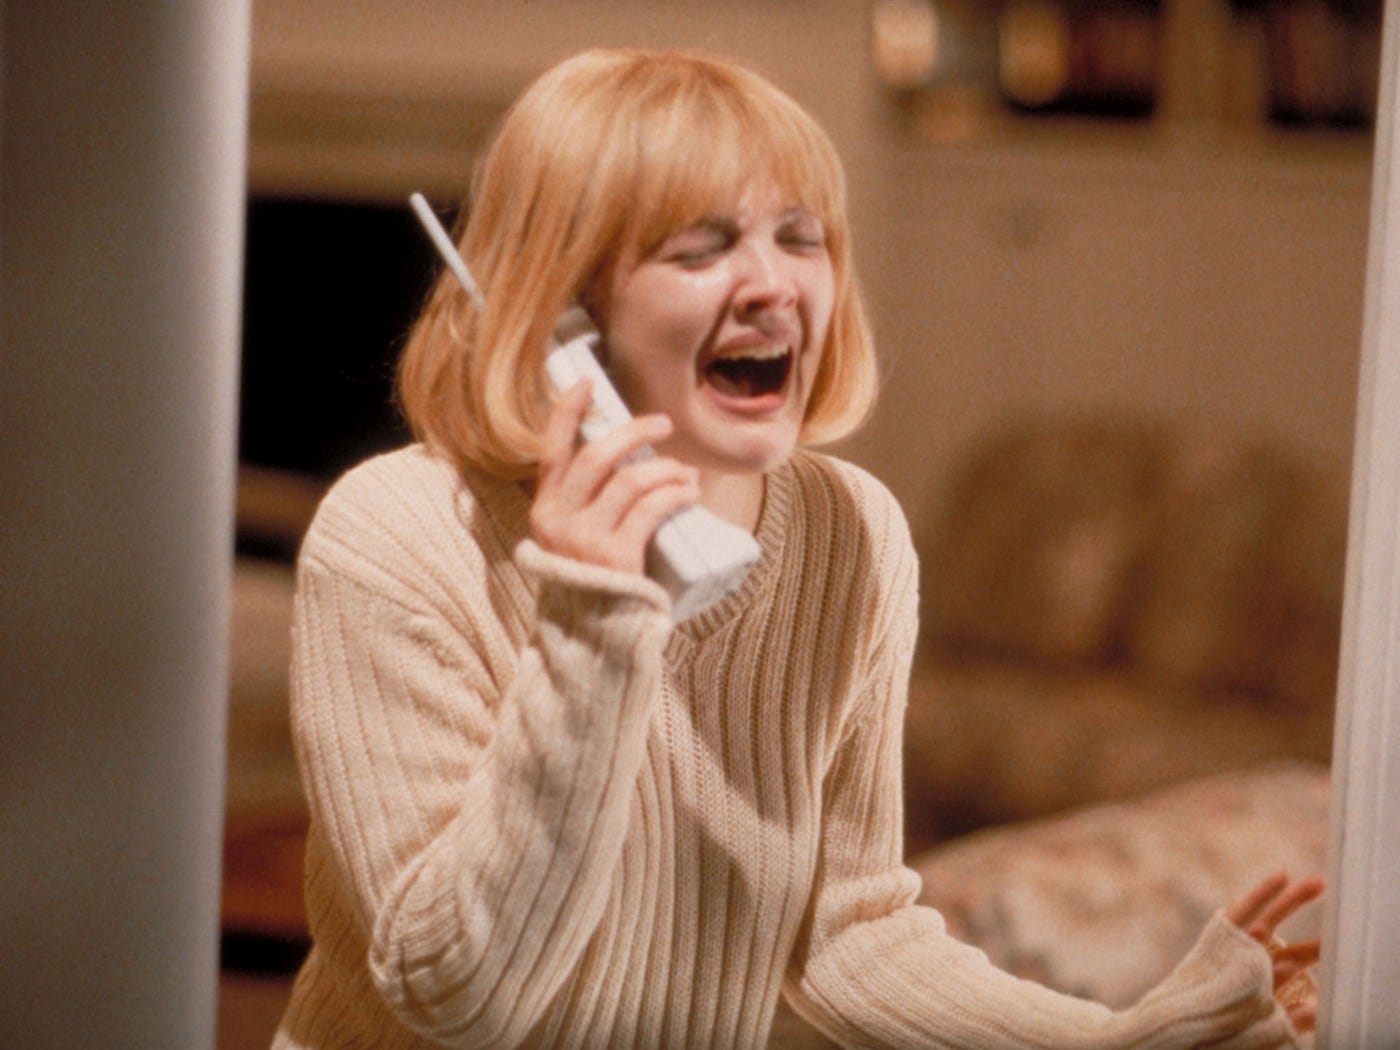 Scream movie trivia: Drew Barrymore accidentally called 911 while filming Scream. -rmrk*st | Remarkist Magazine